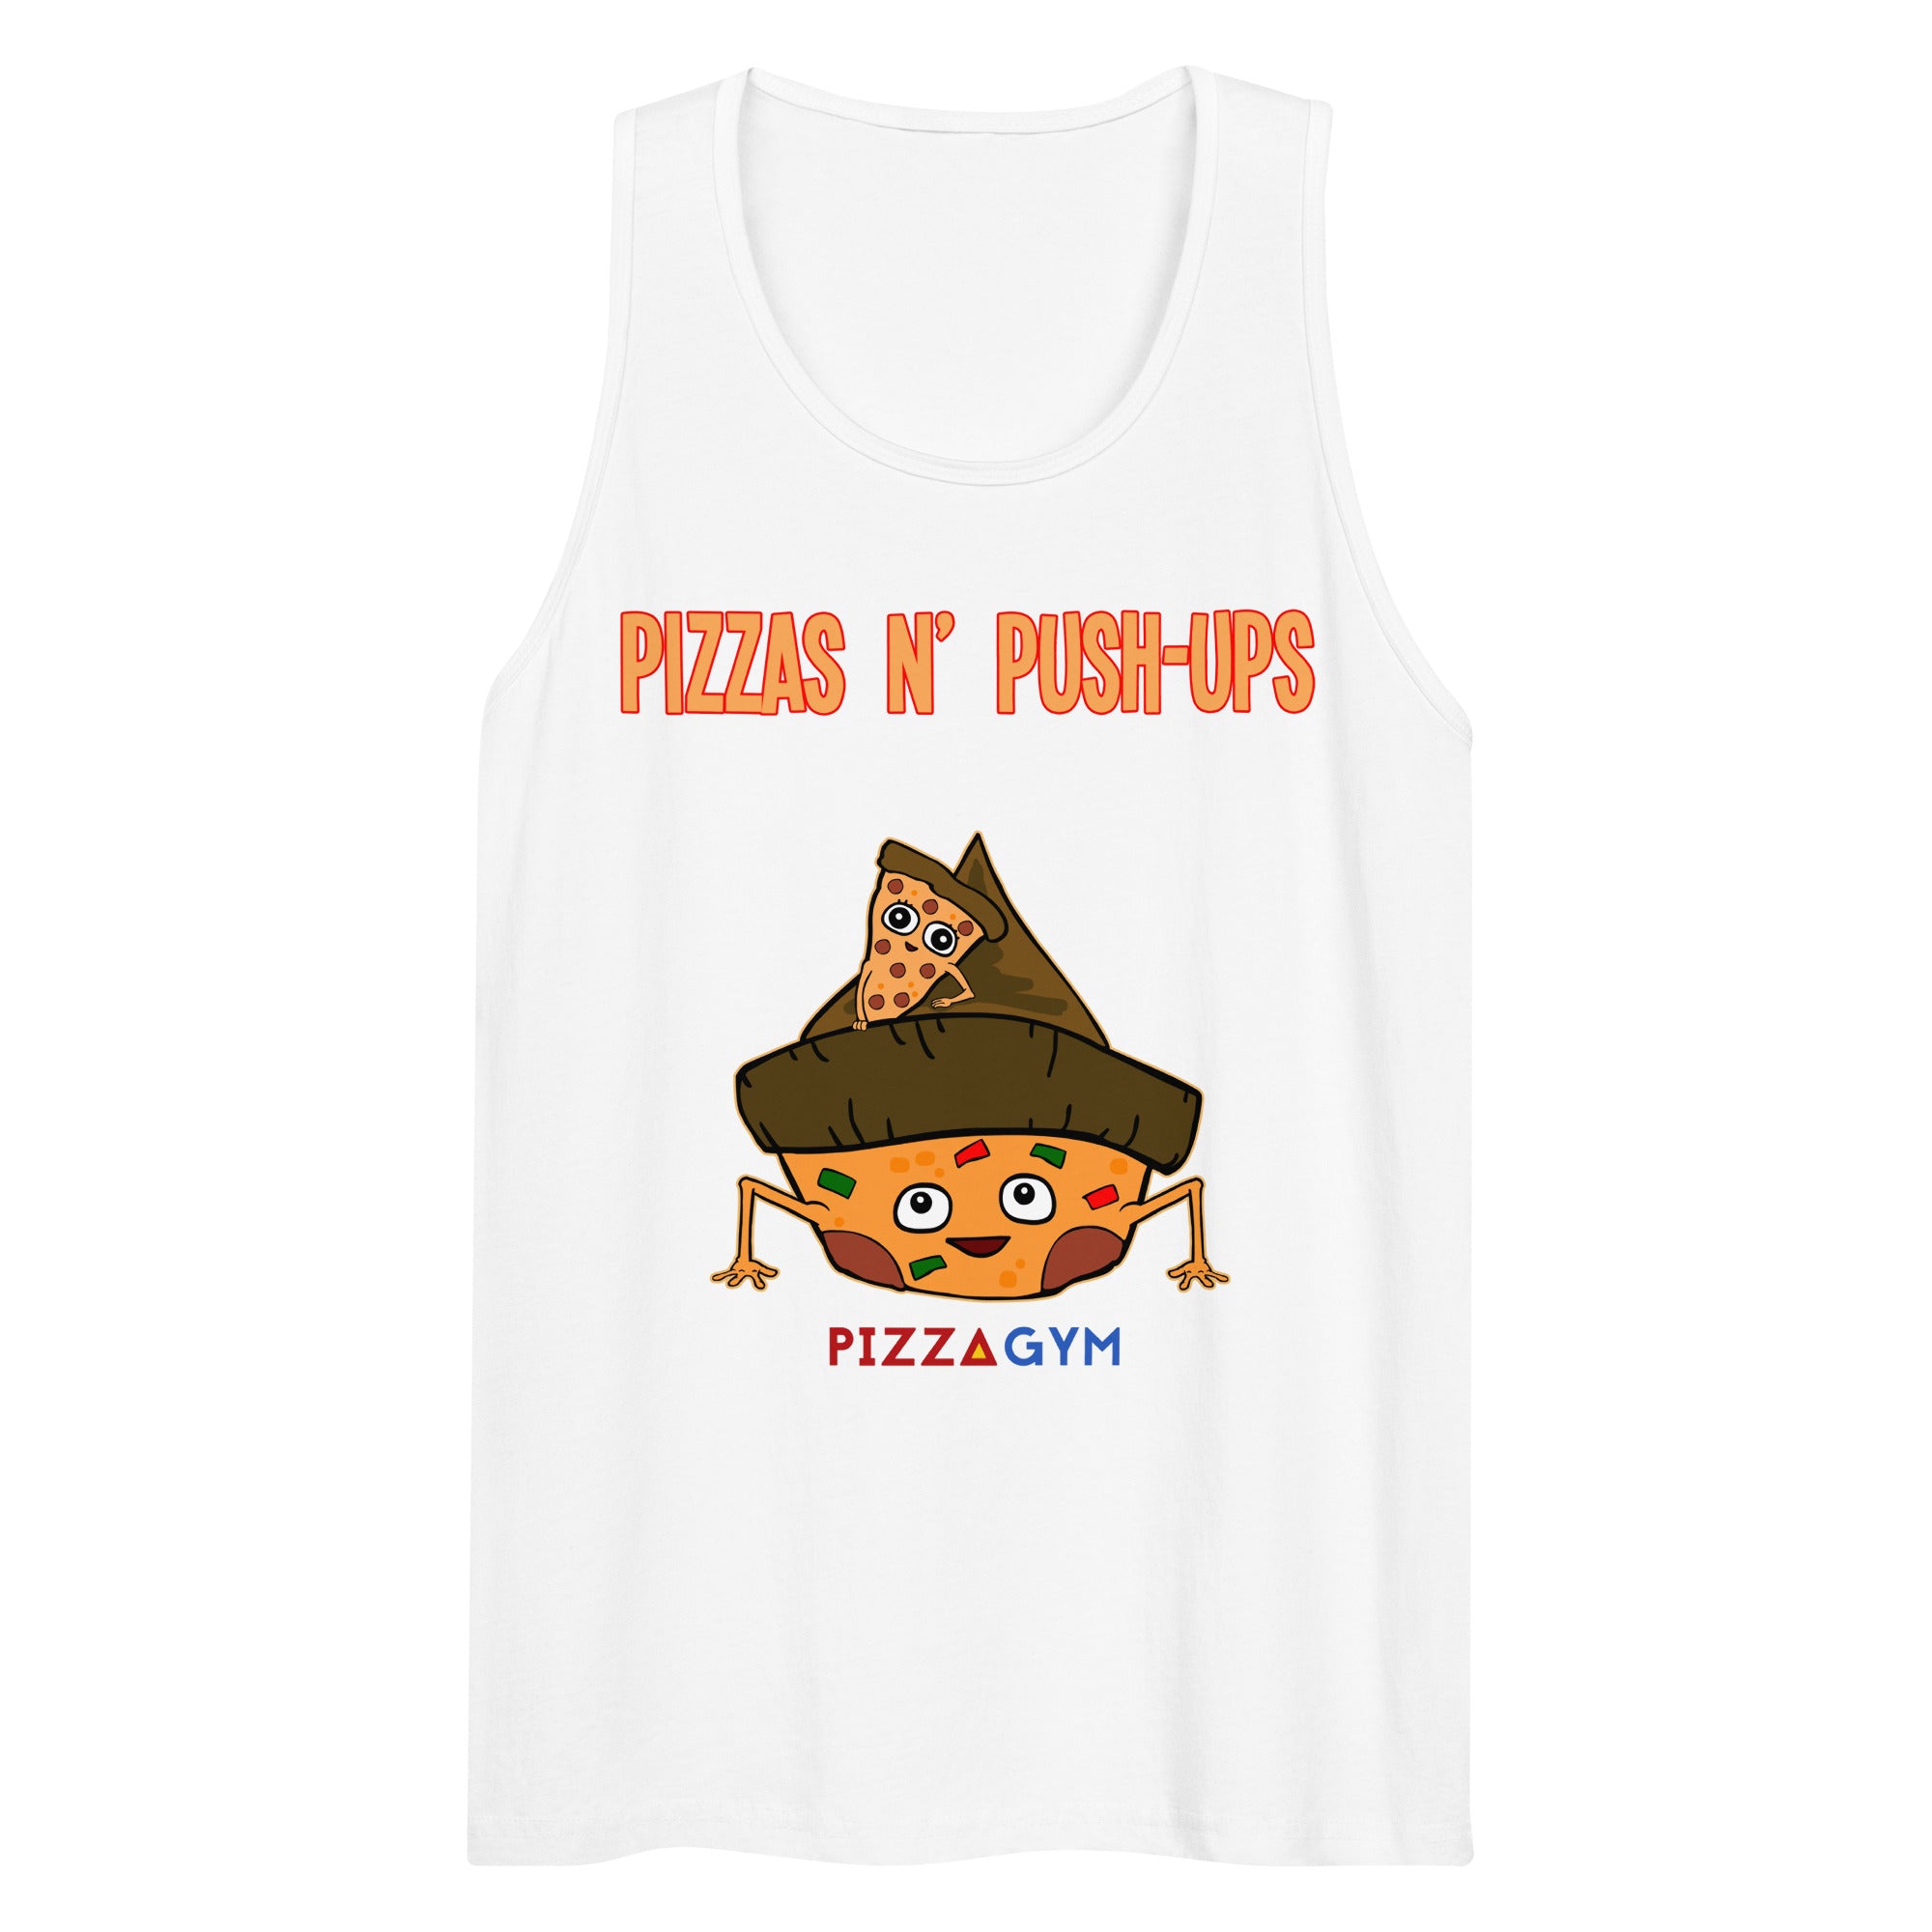 Pizzas N' Push-Ups